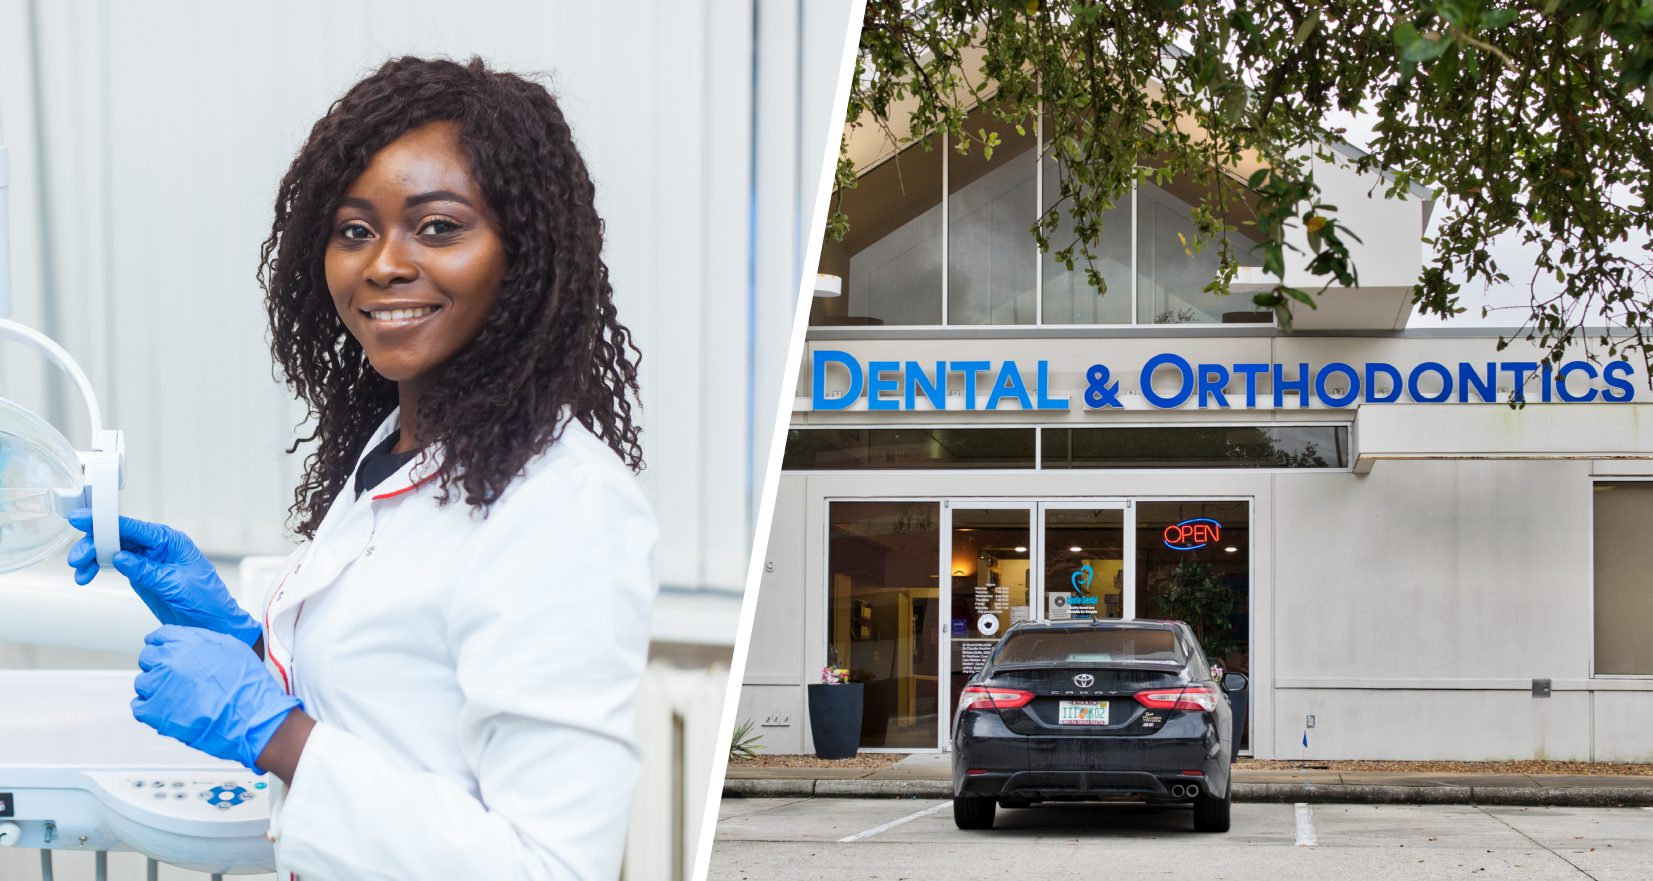 My Social Practice - Social Media Marketing for Dental & Dental Specialty Practices - orthodontic marketing